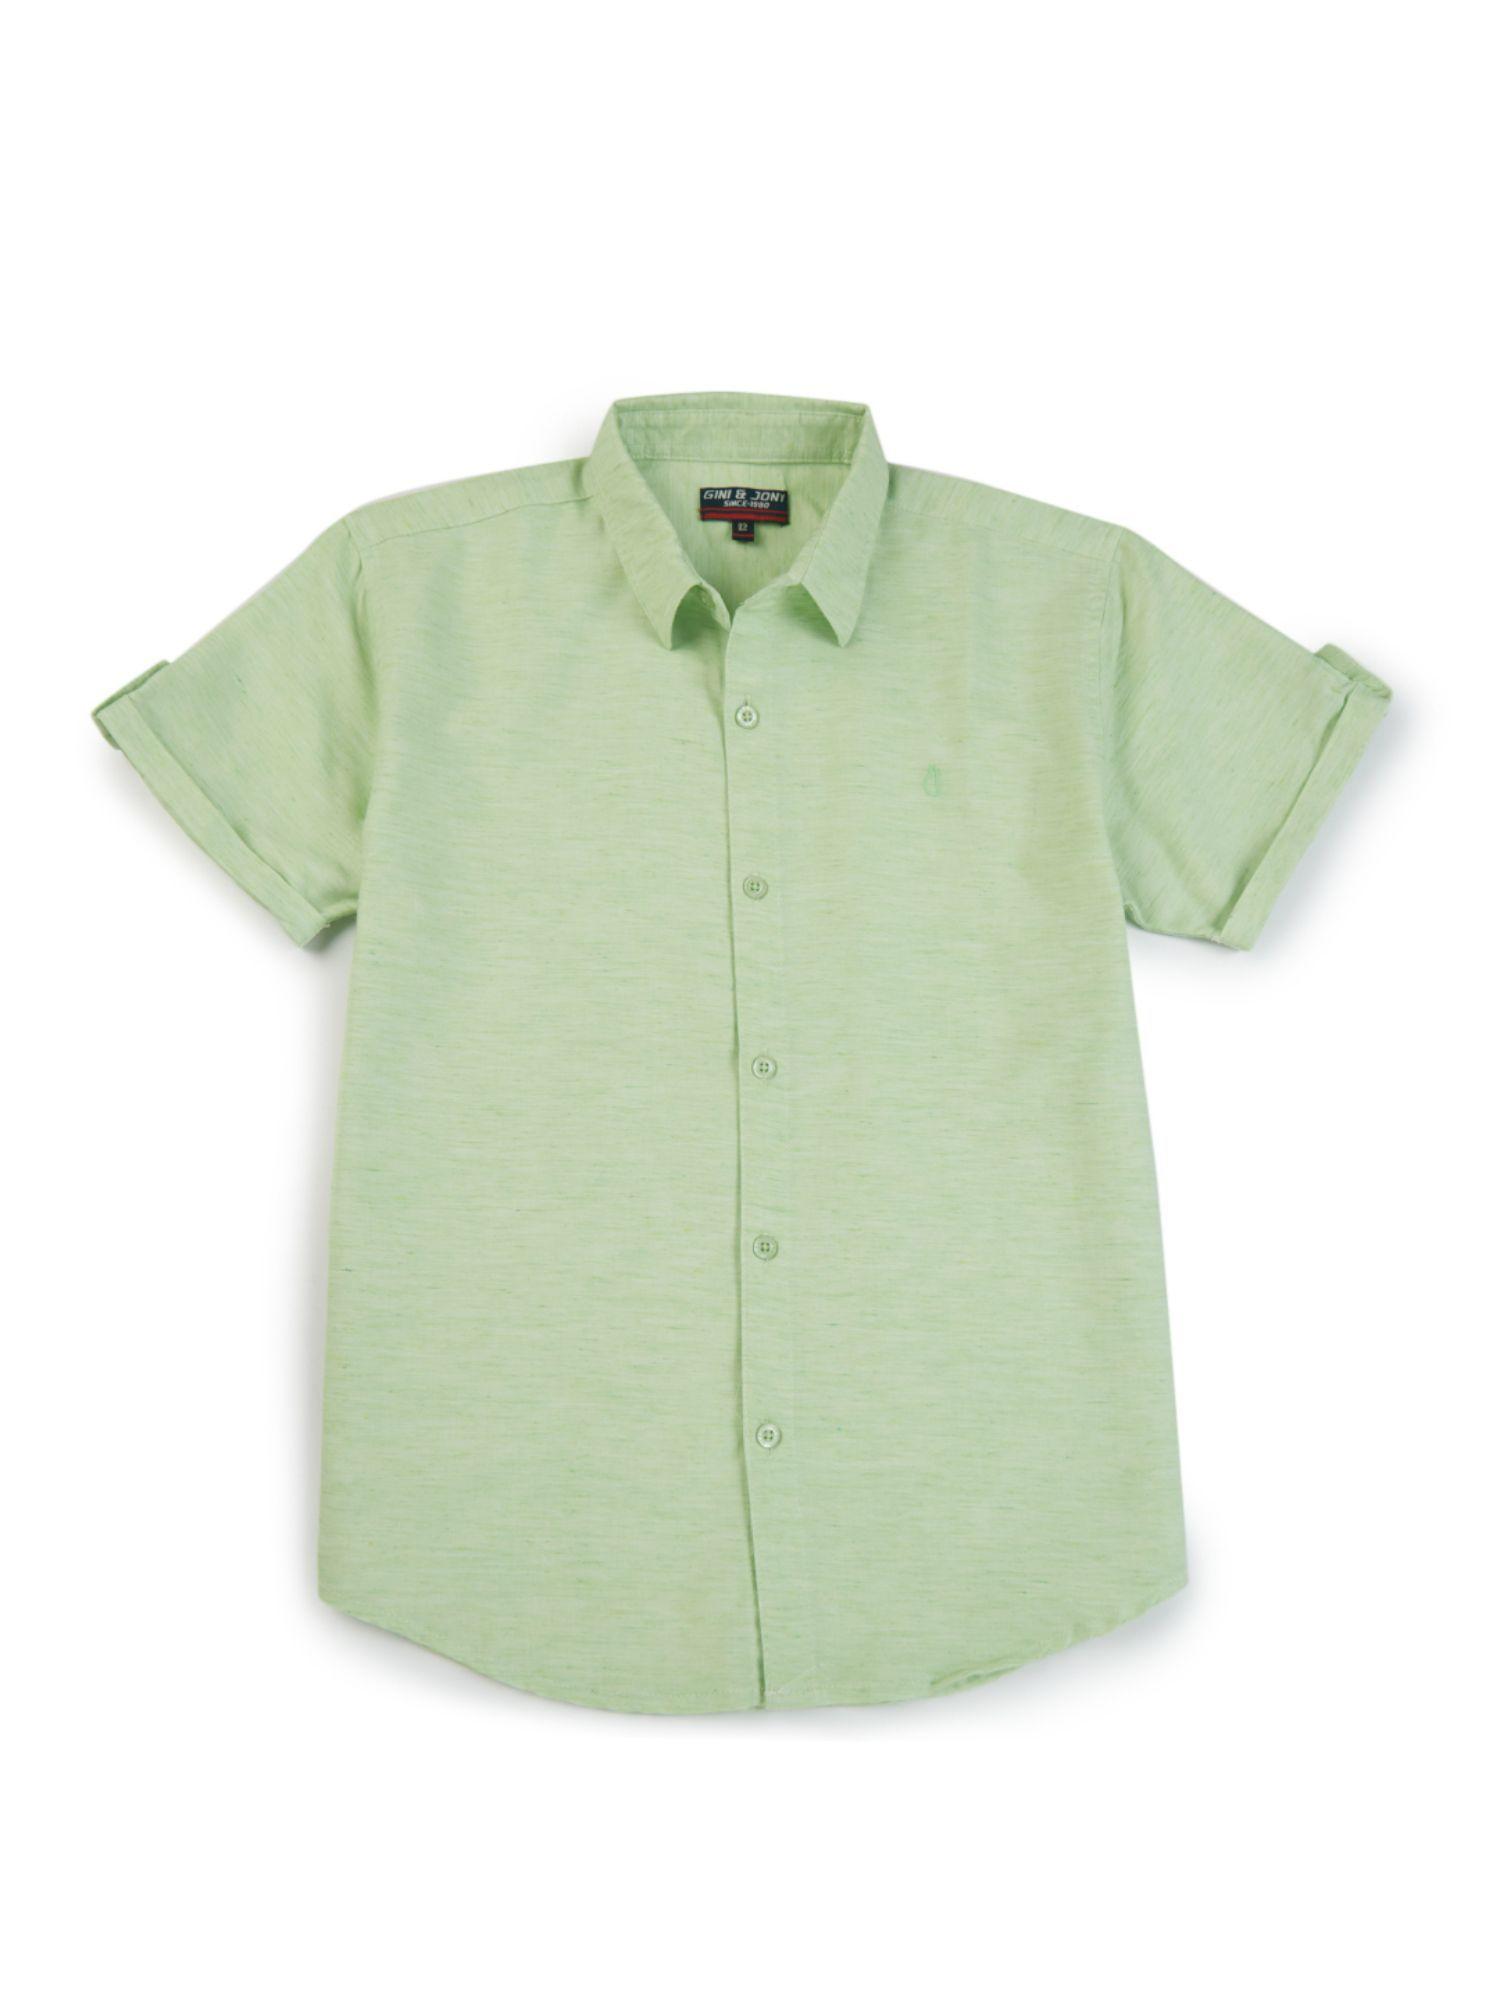 boys-green-cotton-solid-shirt-half-sleeves